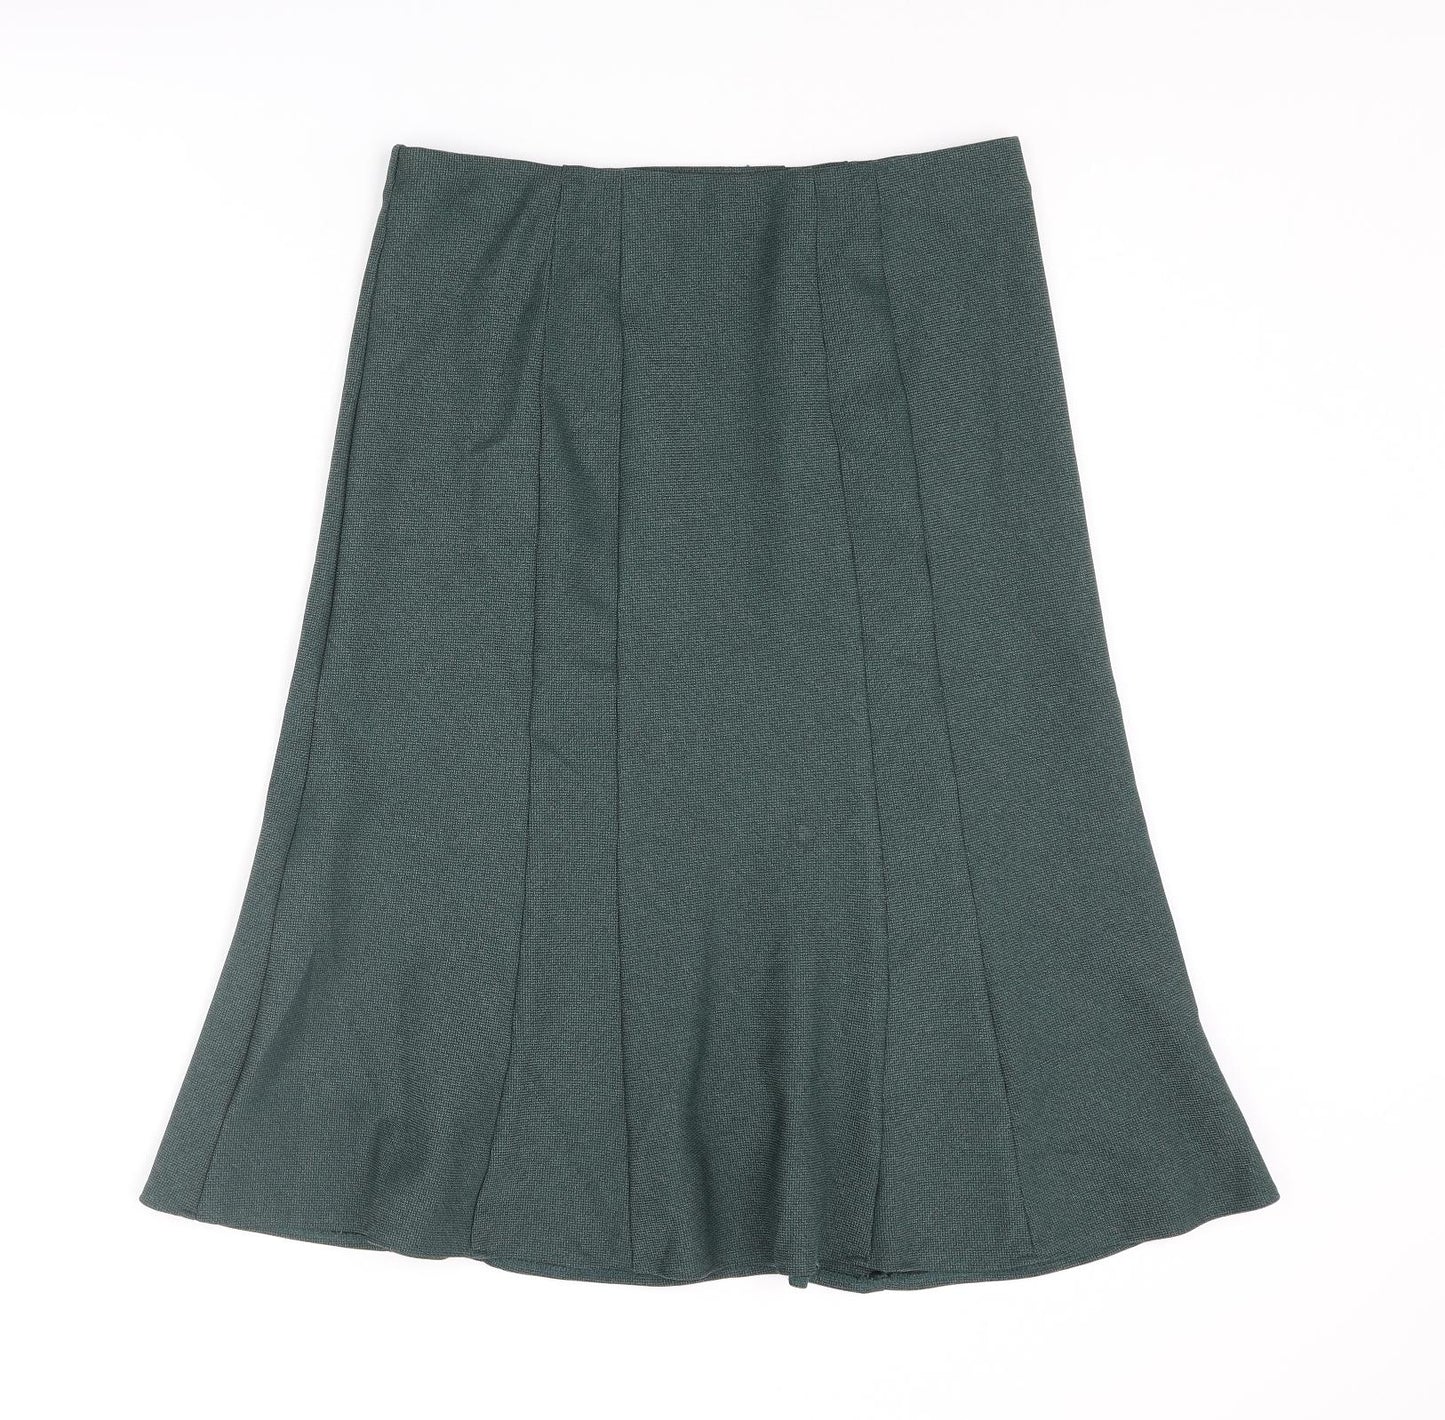 EWM Womens Green Polyester Swing Skirt Size 12